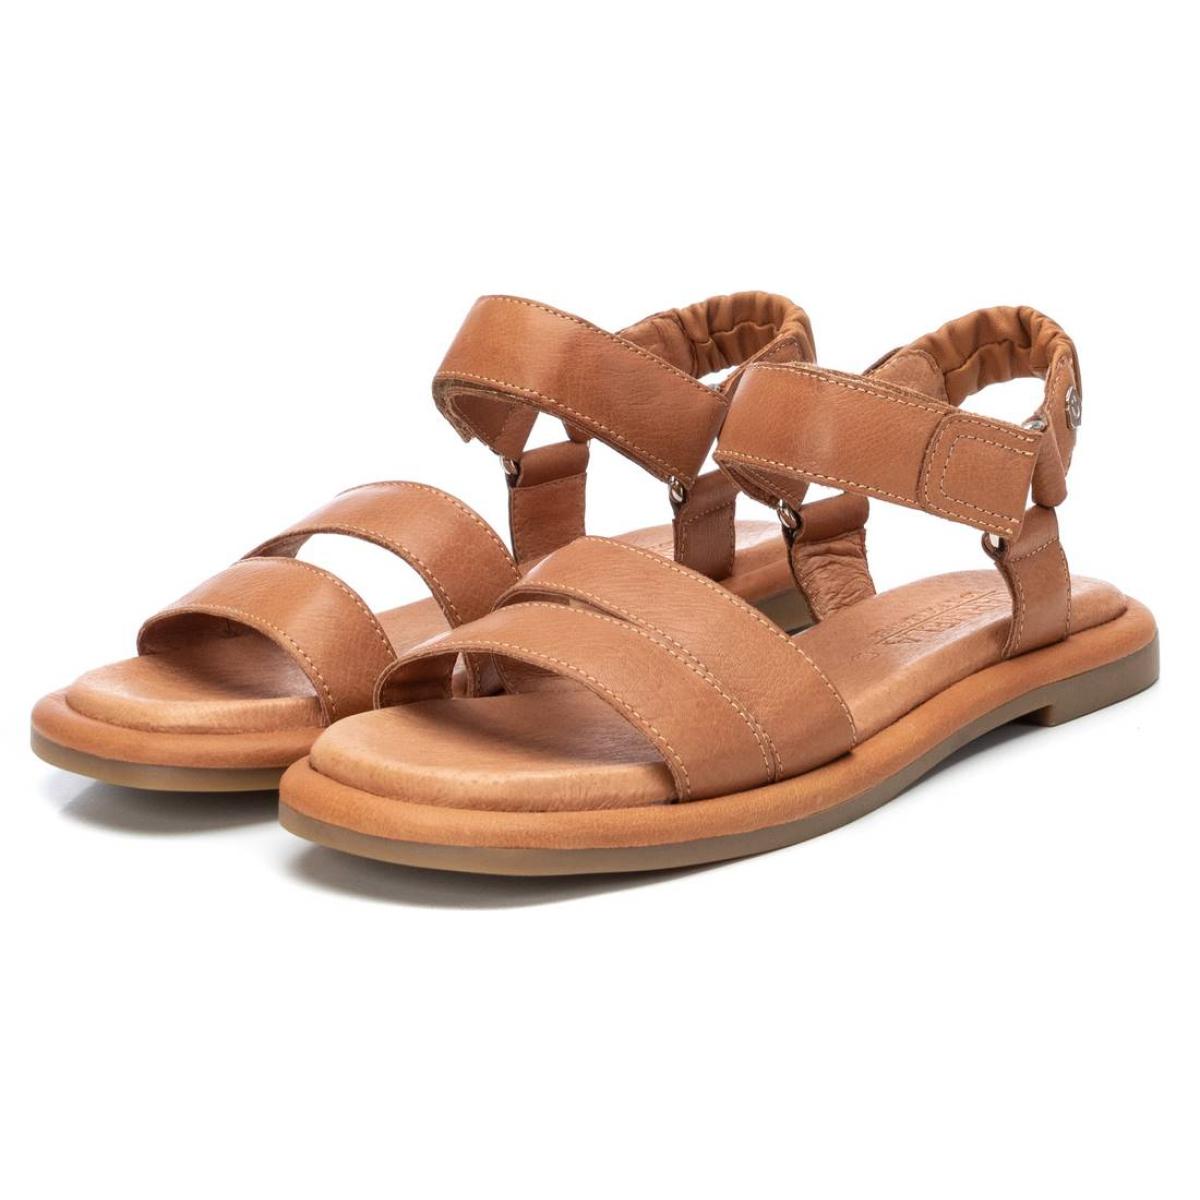 Sandalia de piel camel